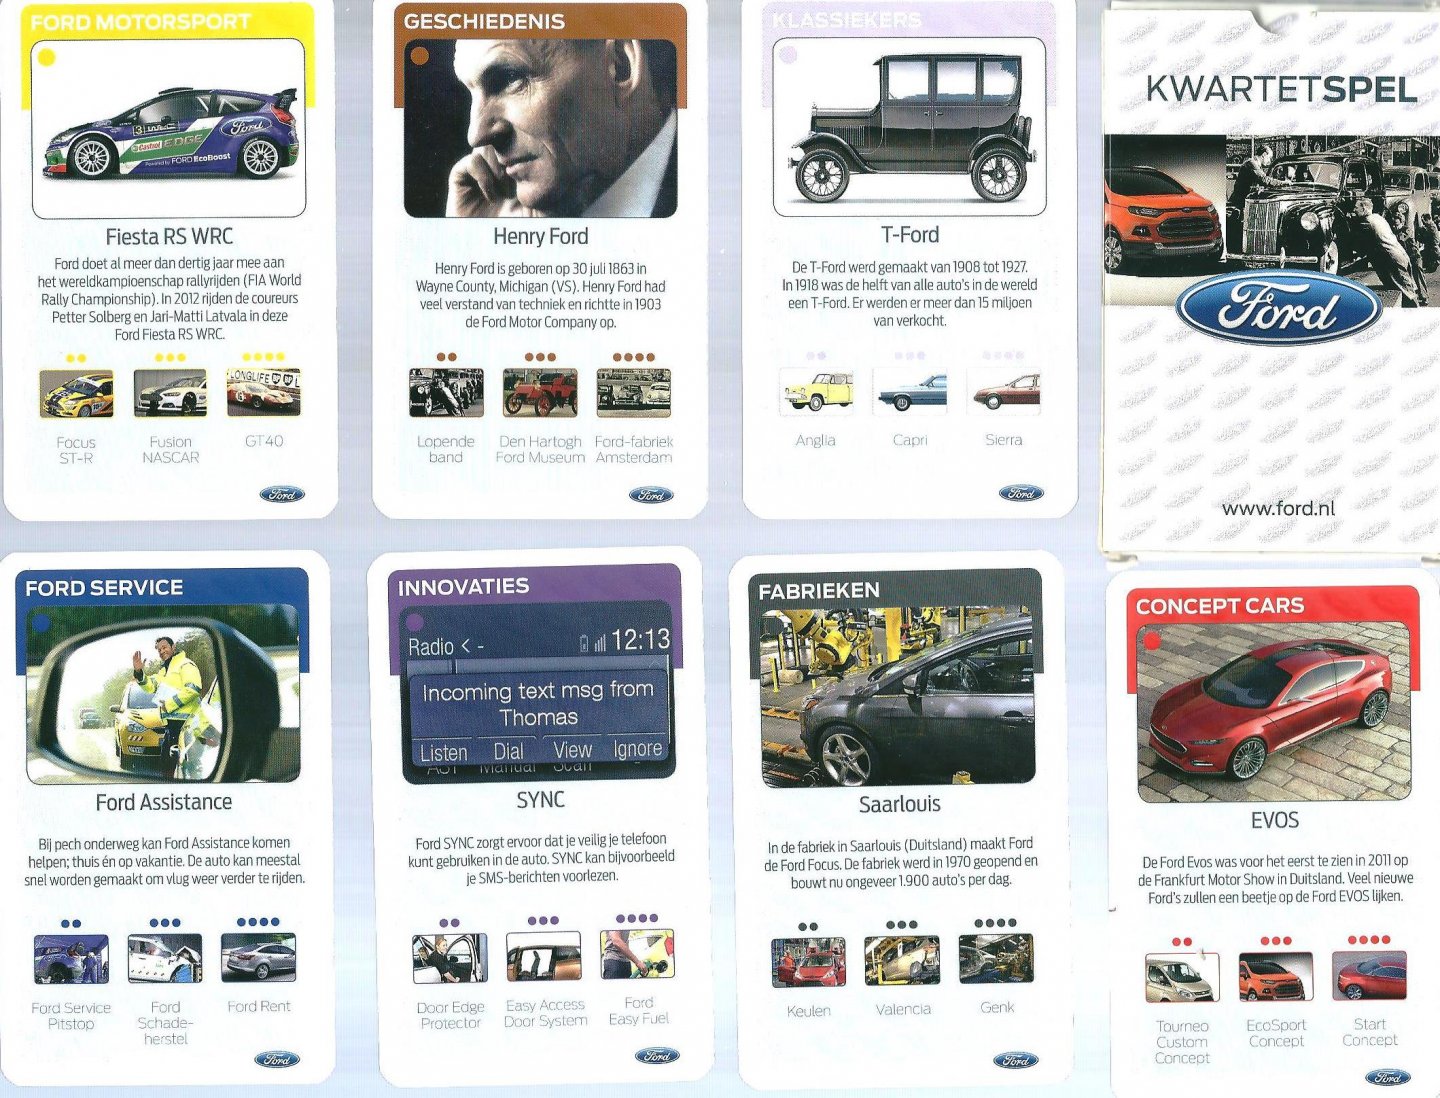 Ford - Kwartetspel Ford. Kwartetspel met 52 kaarten met afbeeldingen + spelregels betreffende Ford automobielen in 13 verschillende categorieën